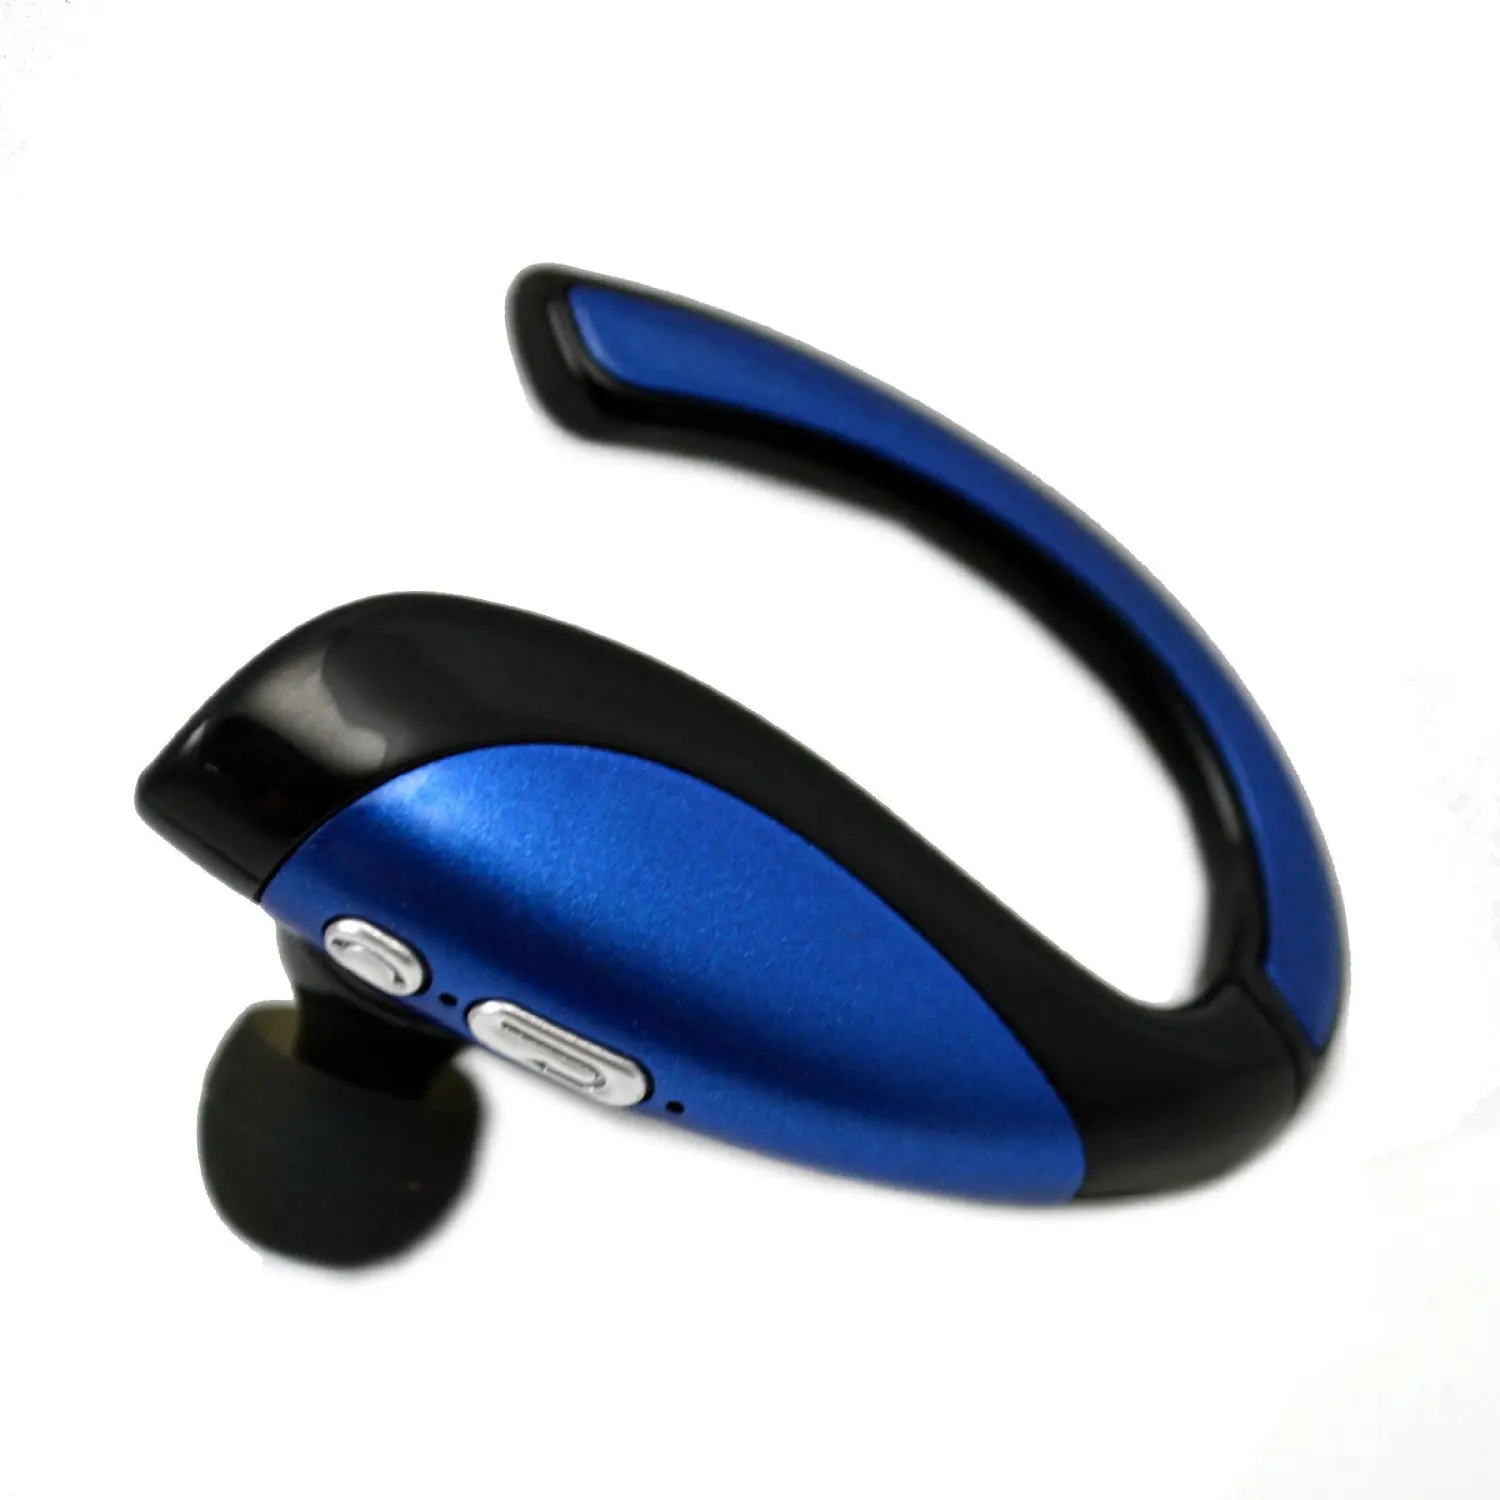 jabra bluetooth headset driver for windows 10